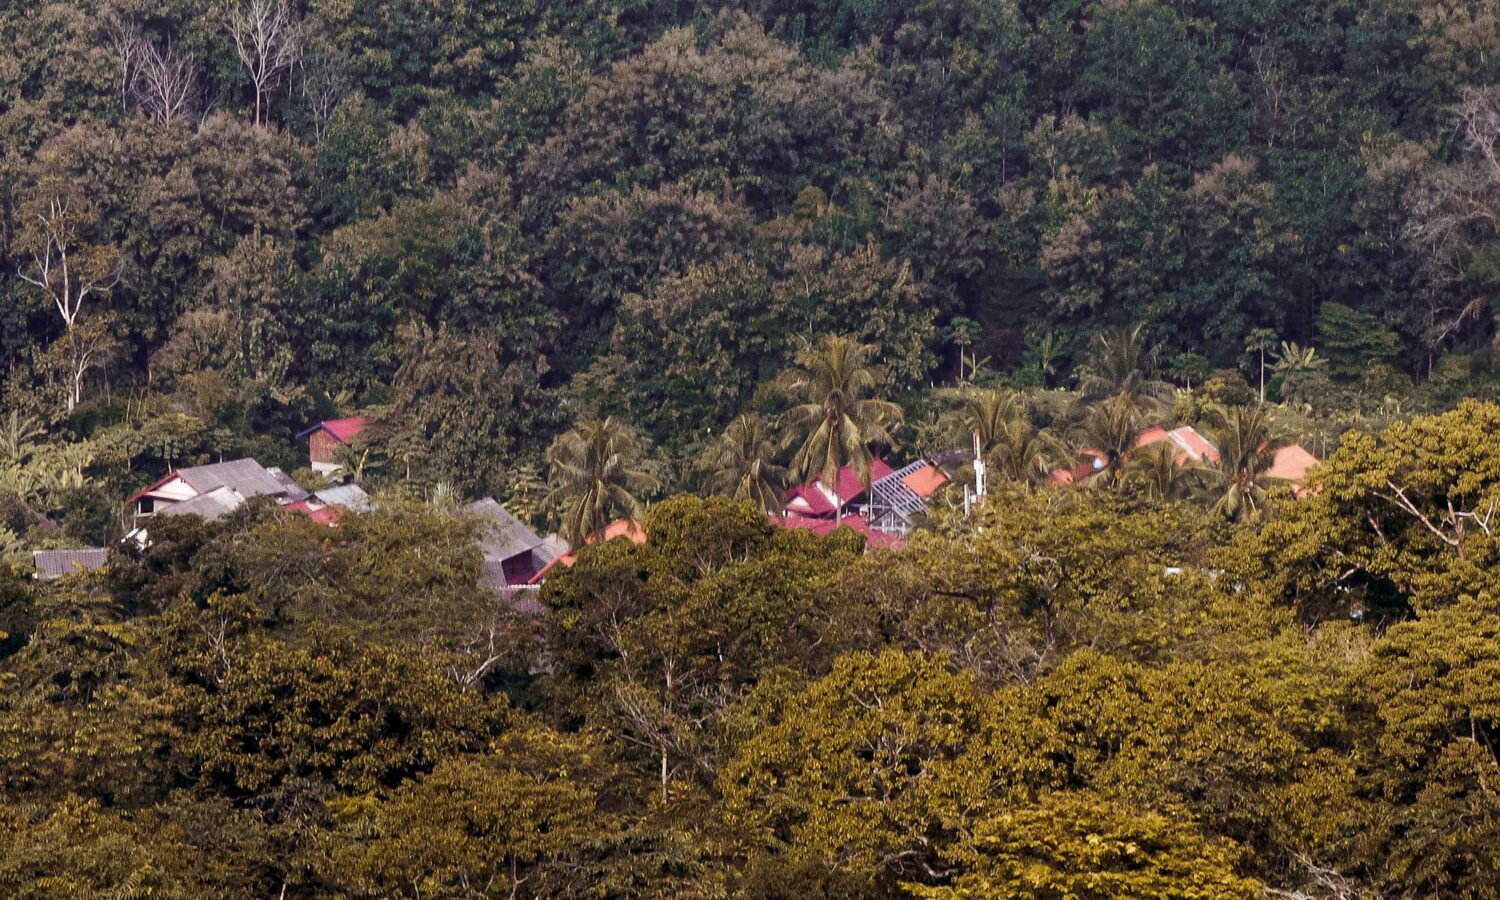 Villages hidden in Laos' tropical jungle